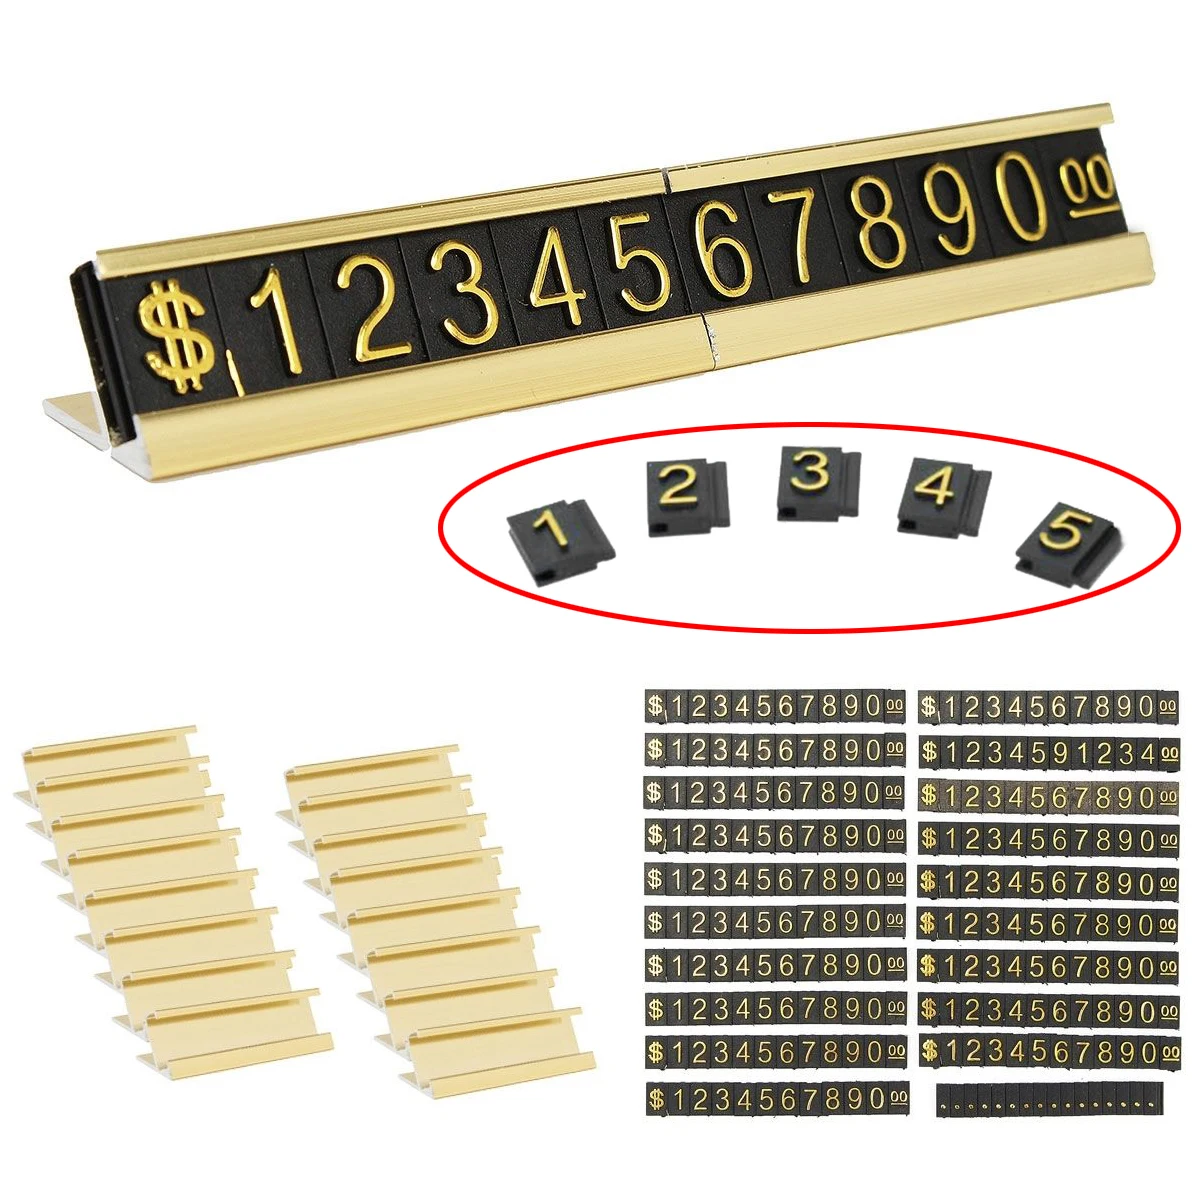 New Golden Adjustable Number Letter Price Display Counter Base Stand Tag Label